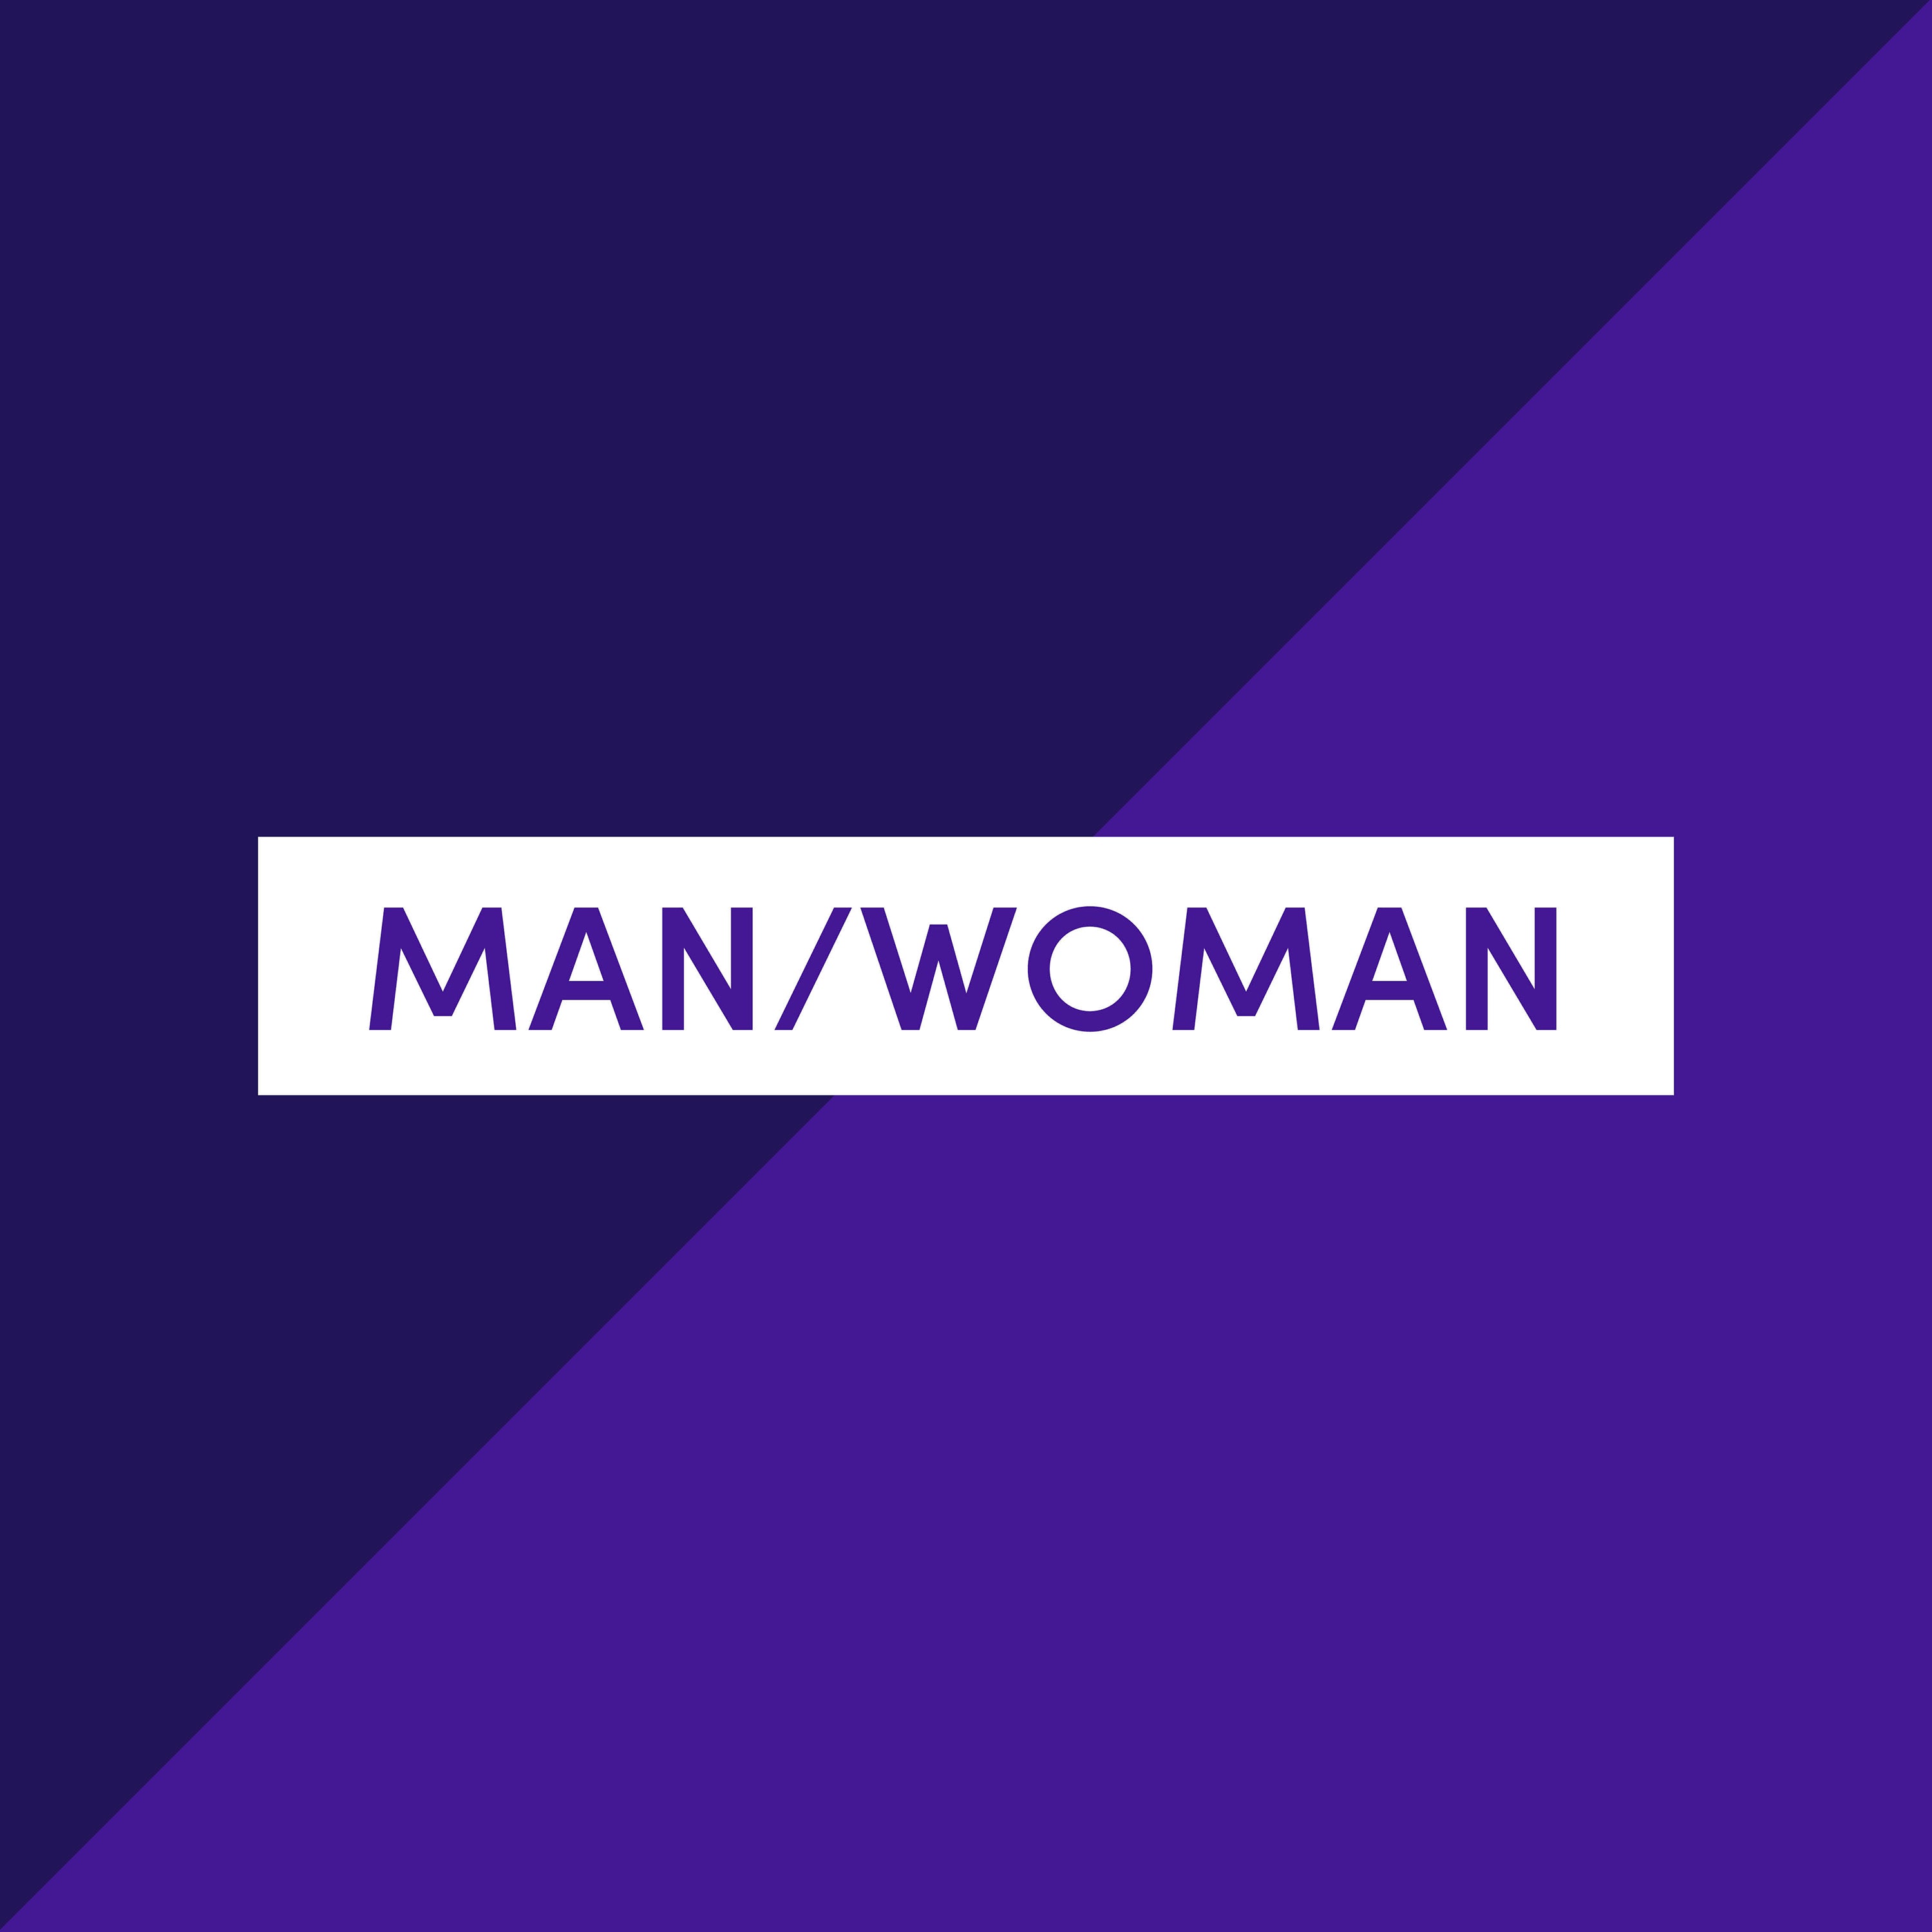 Man/Woman - A Conversation About Gender